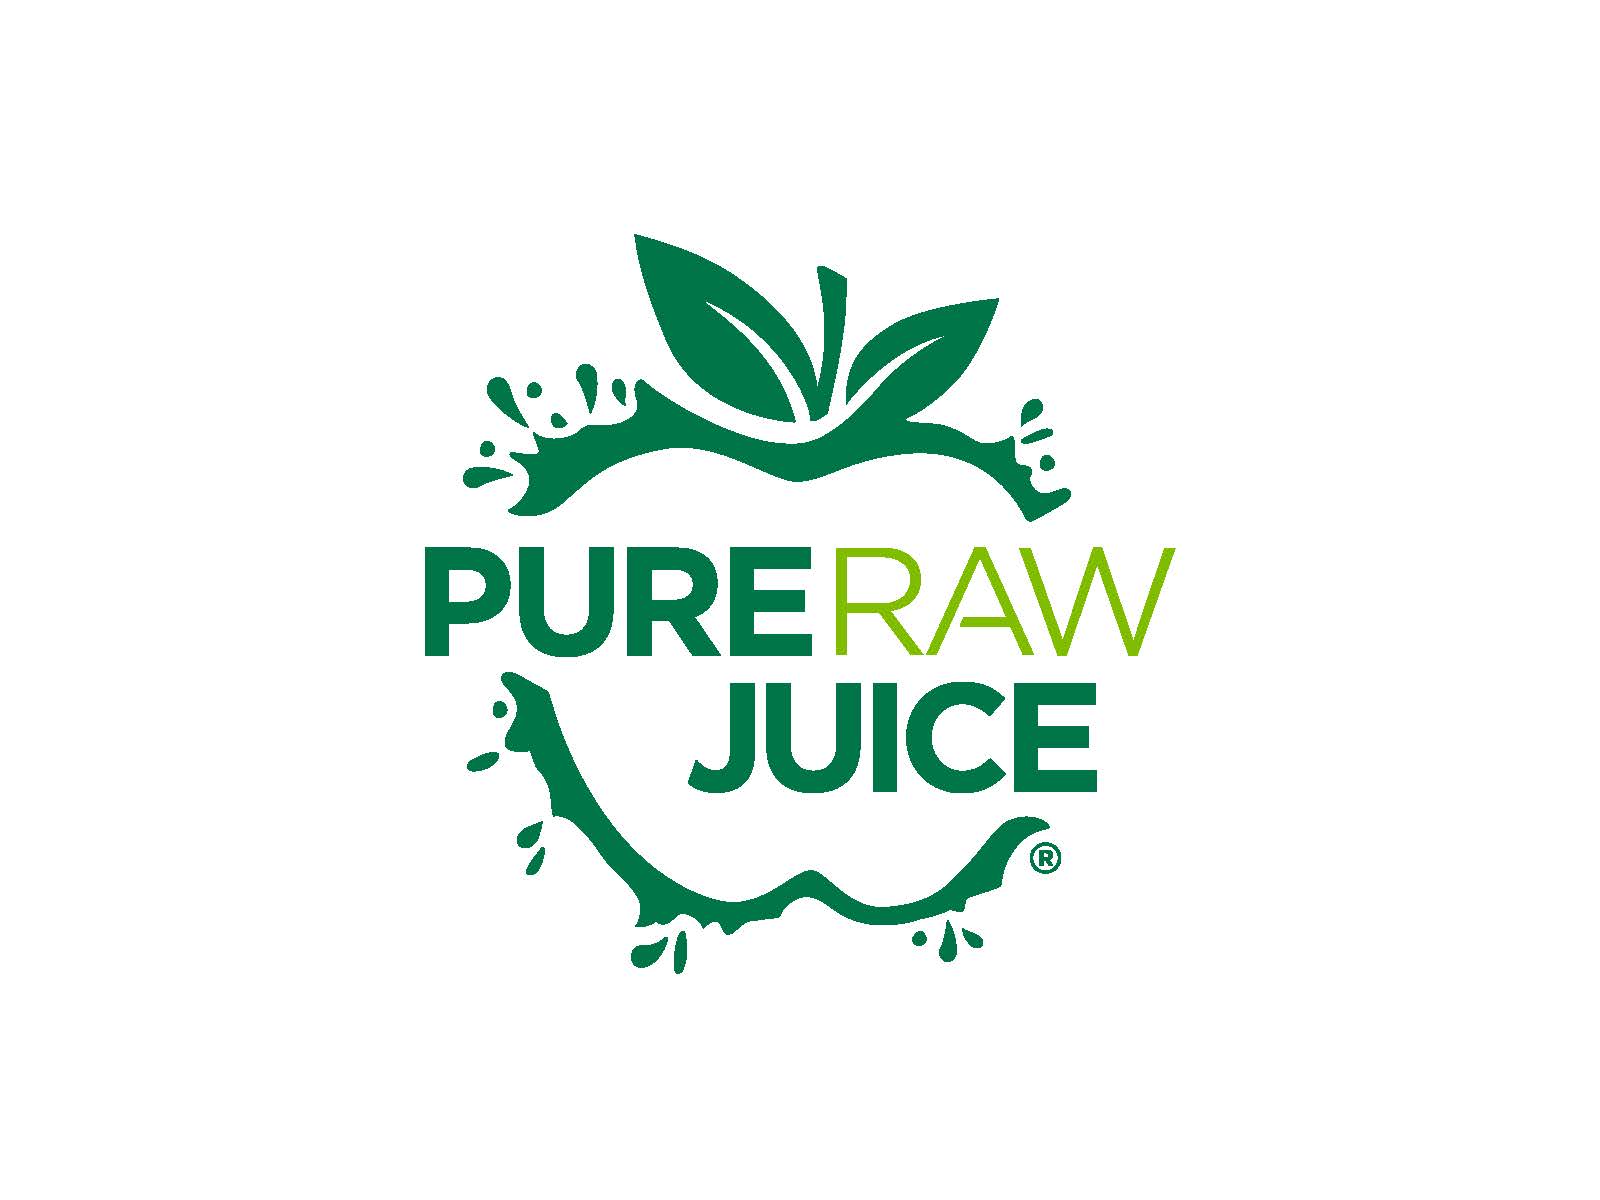 Pure raw juice logo